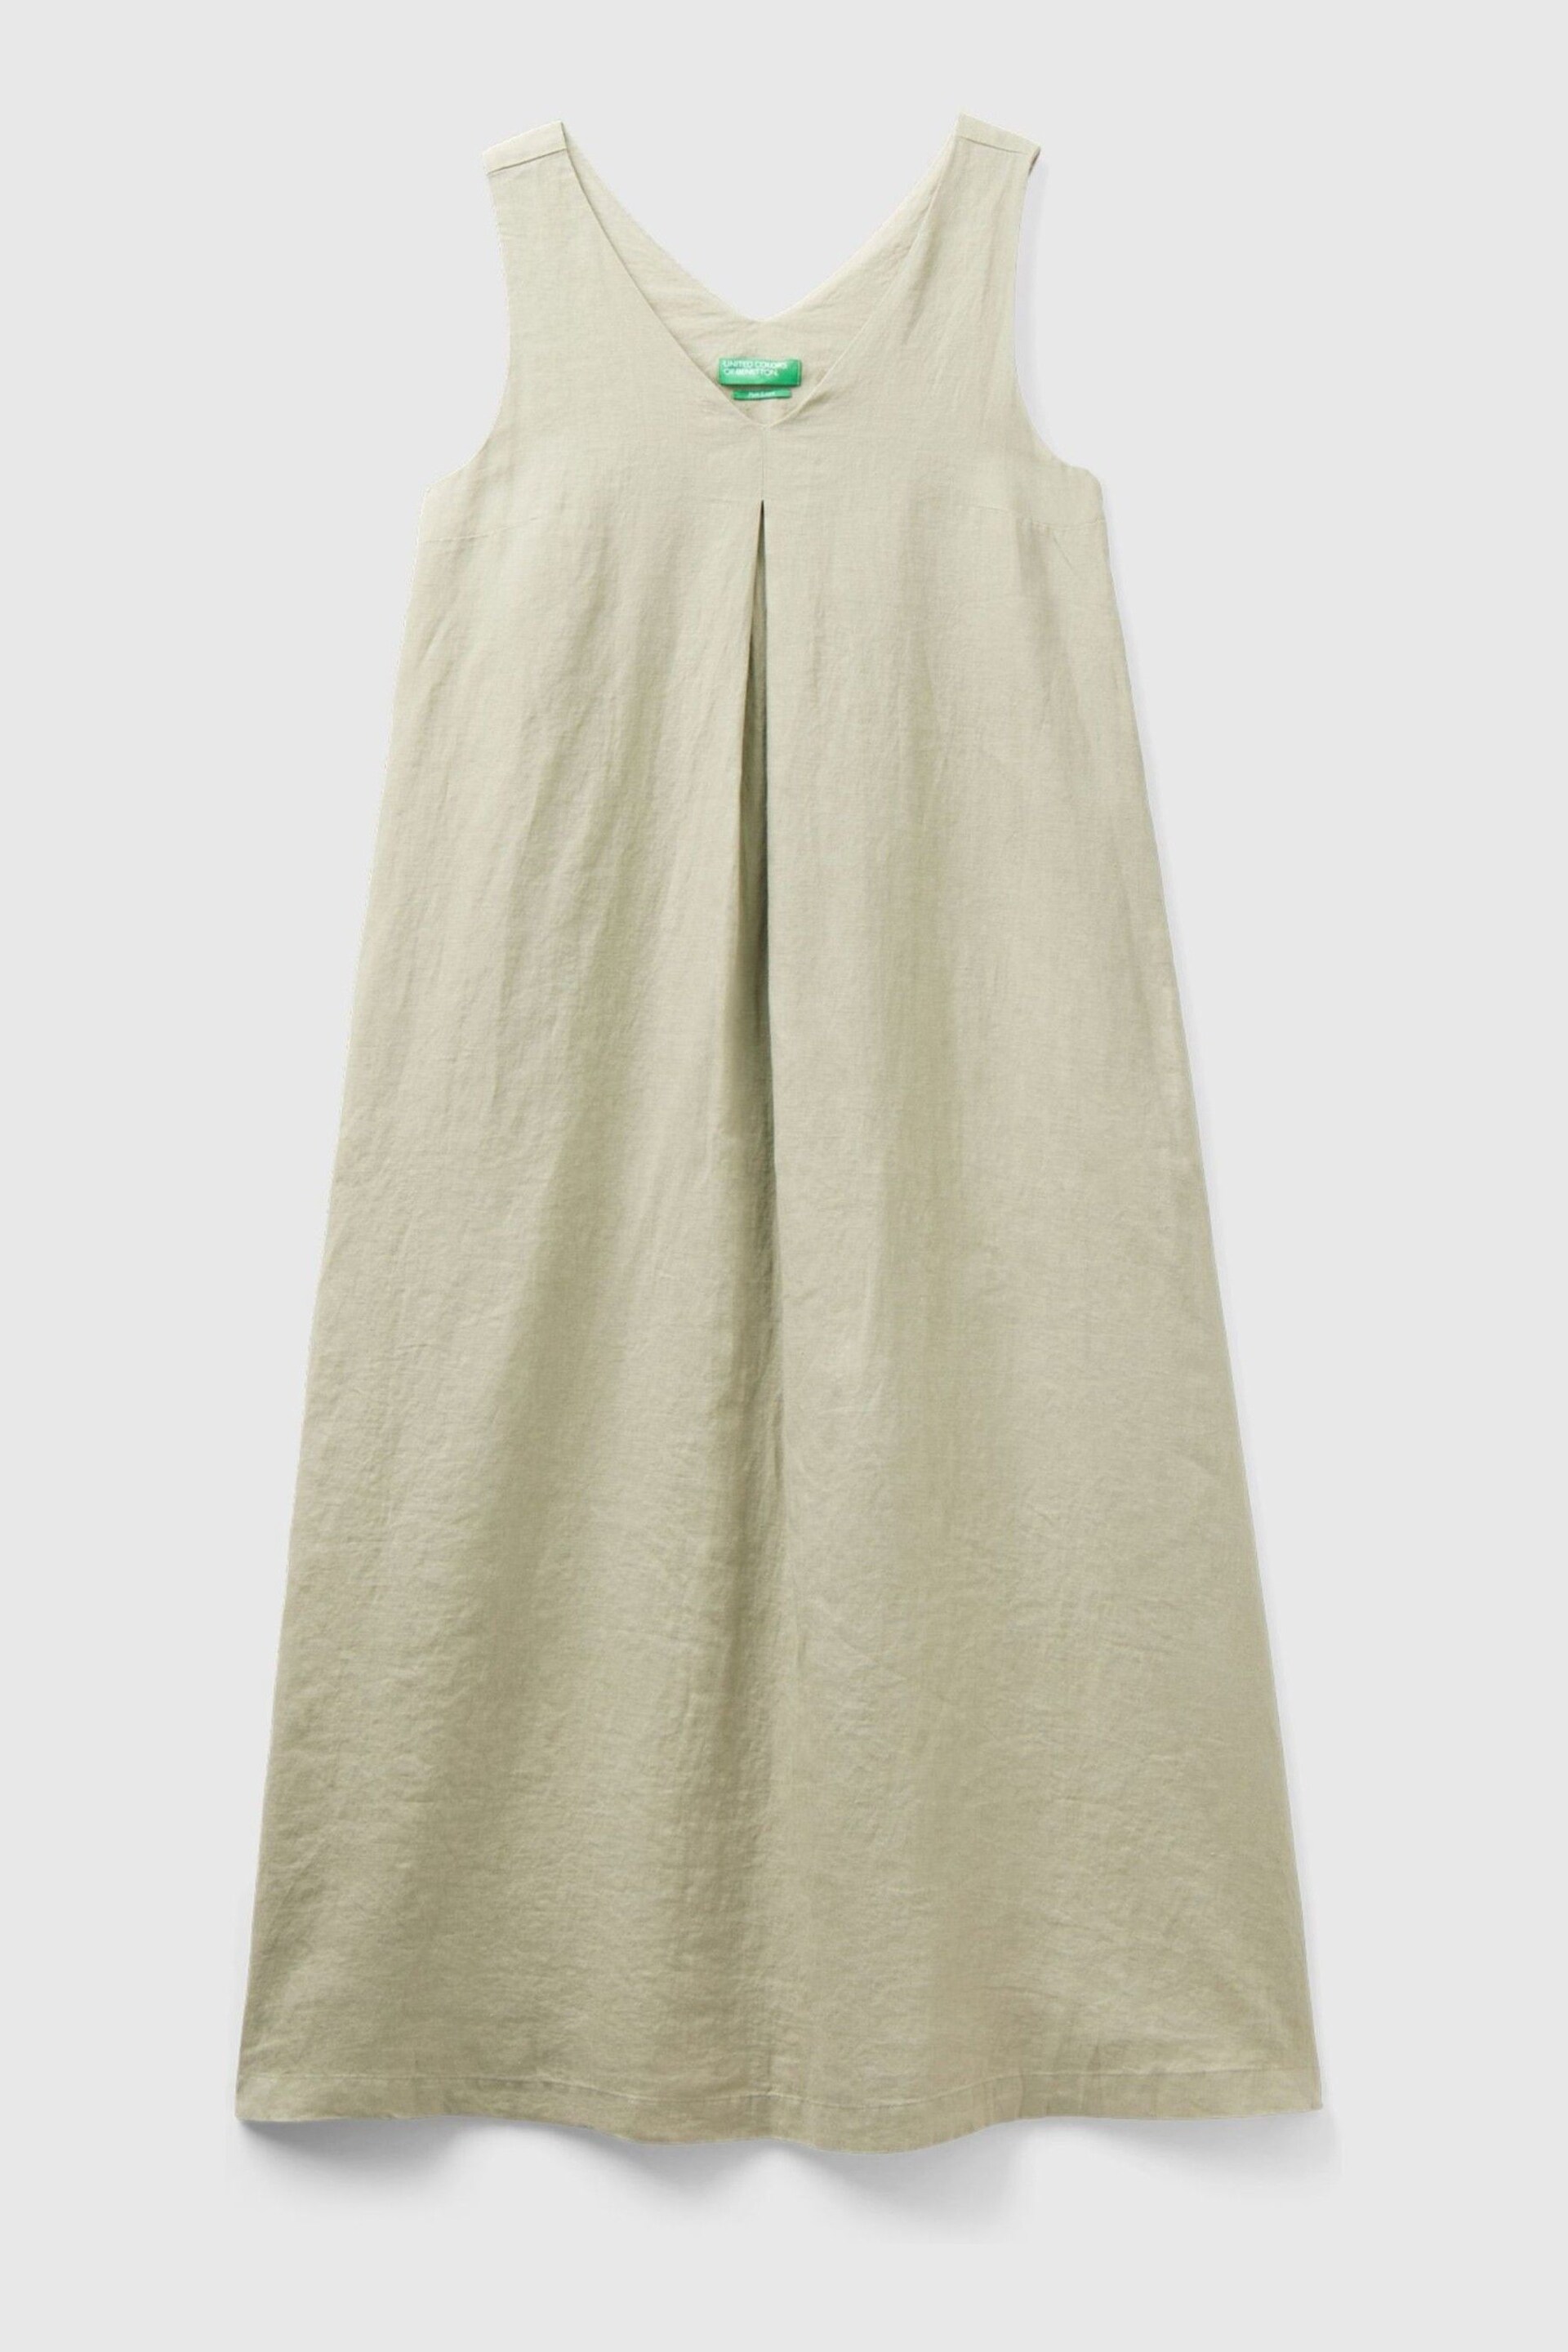 Benetton Linen Maxi Dress - Image 3 of 3